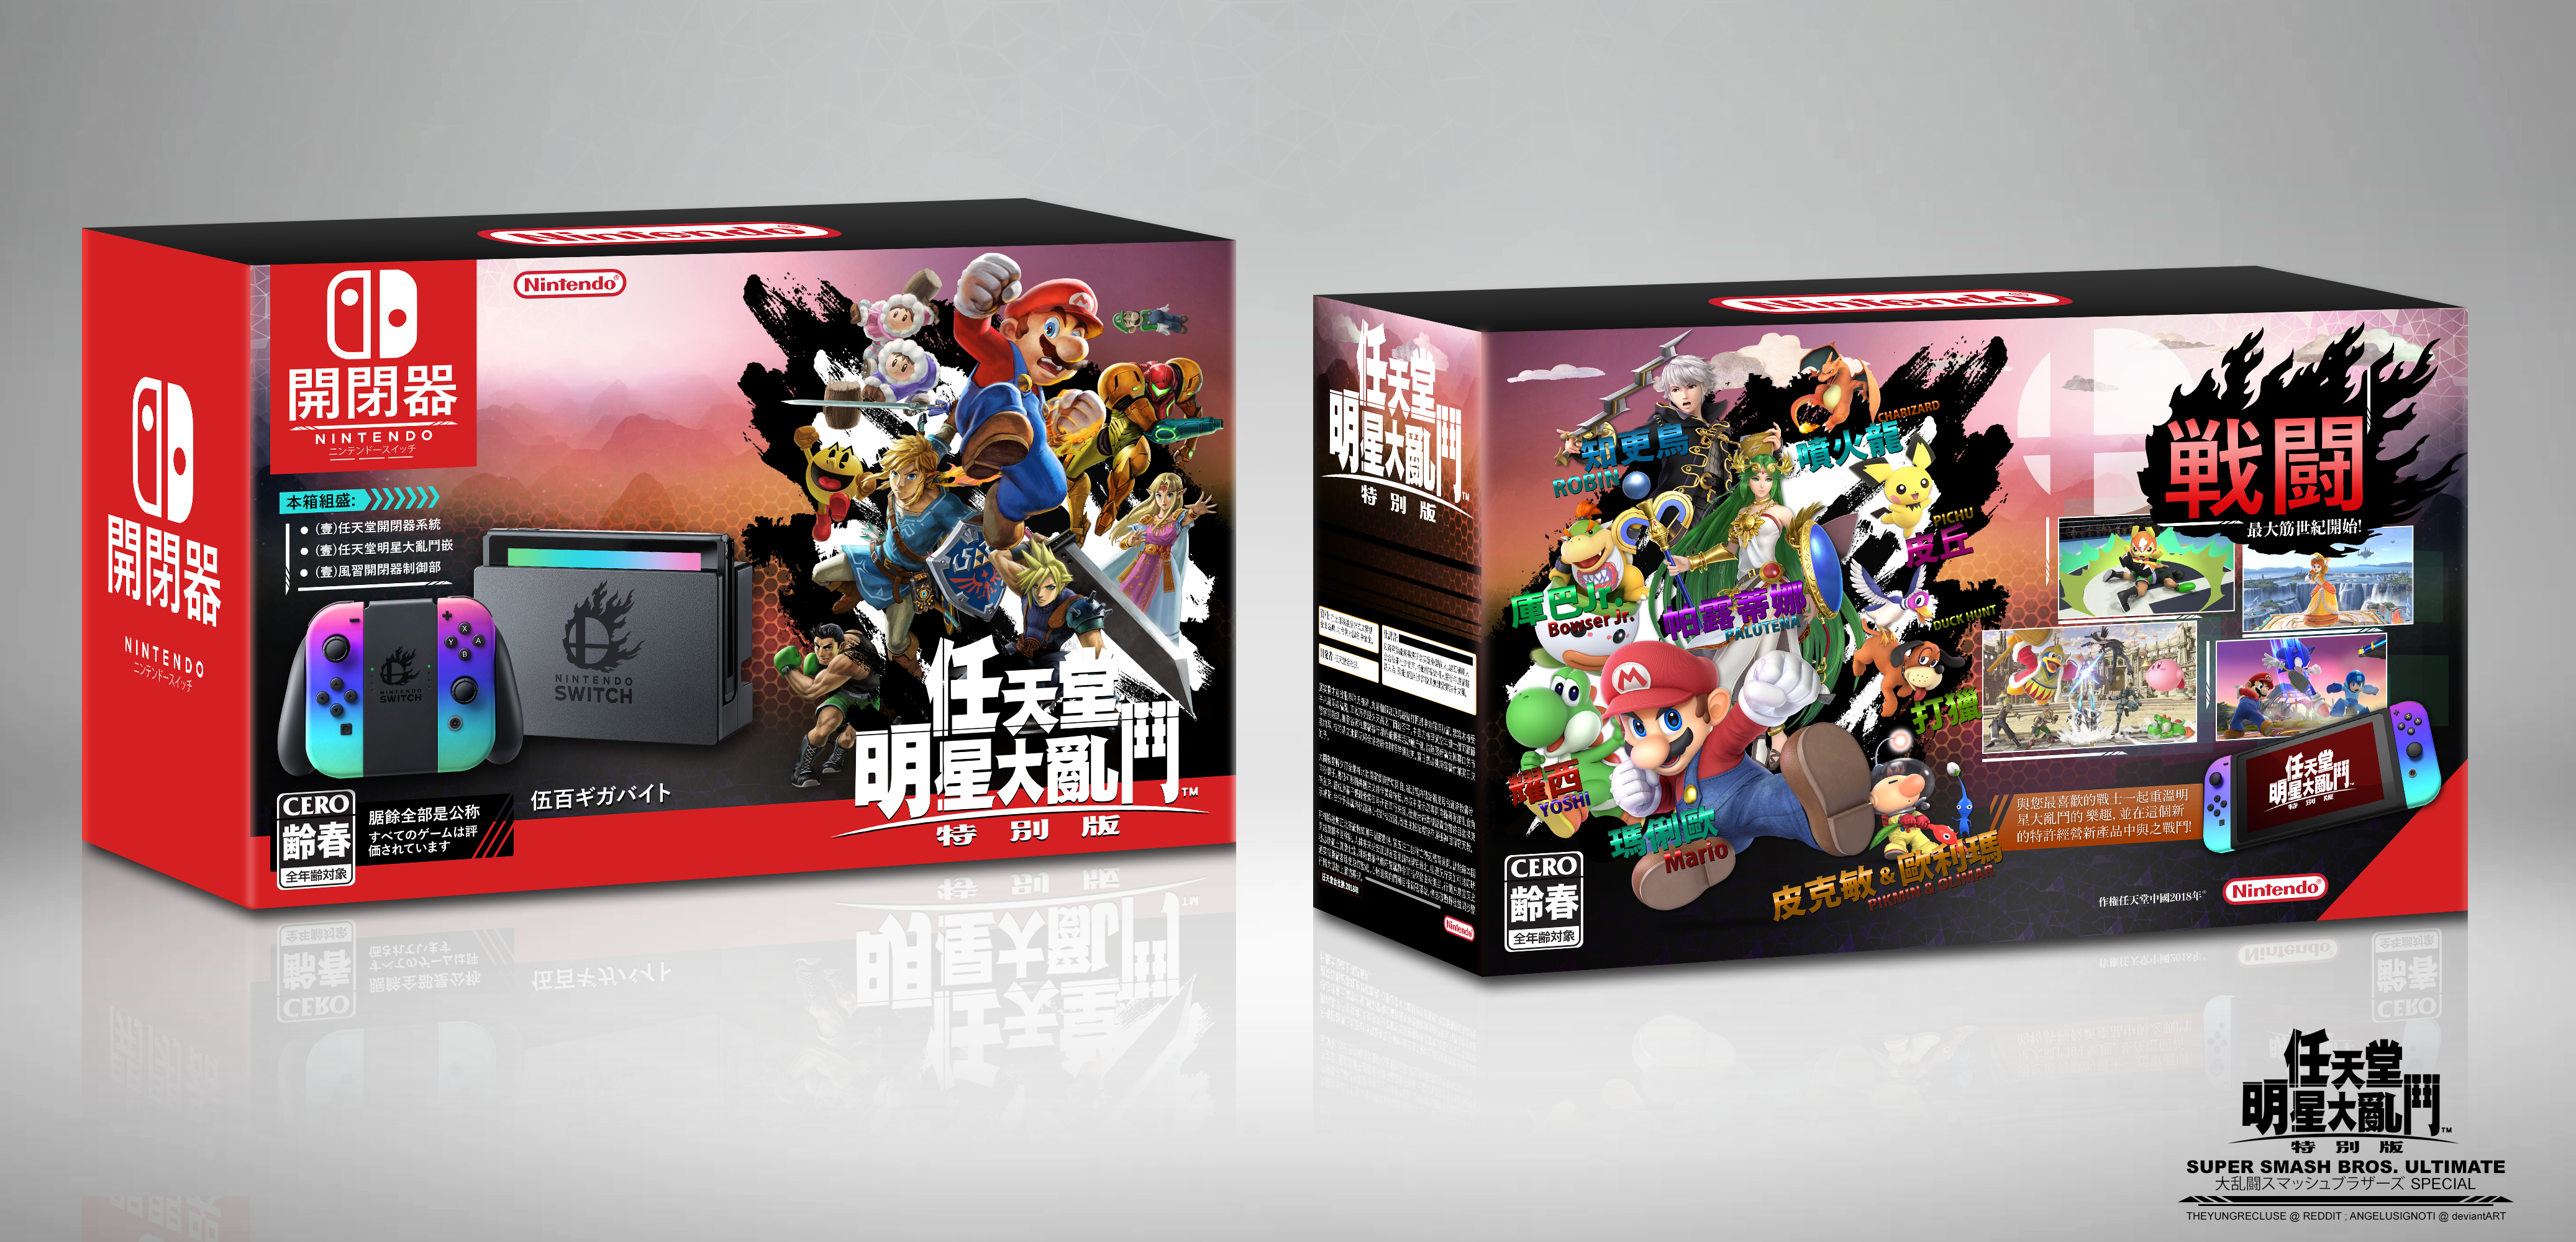 Super Smash Brothers Ultimate Bundle box cover